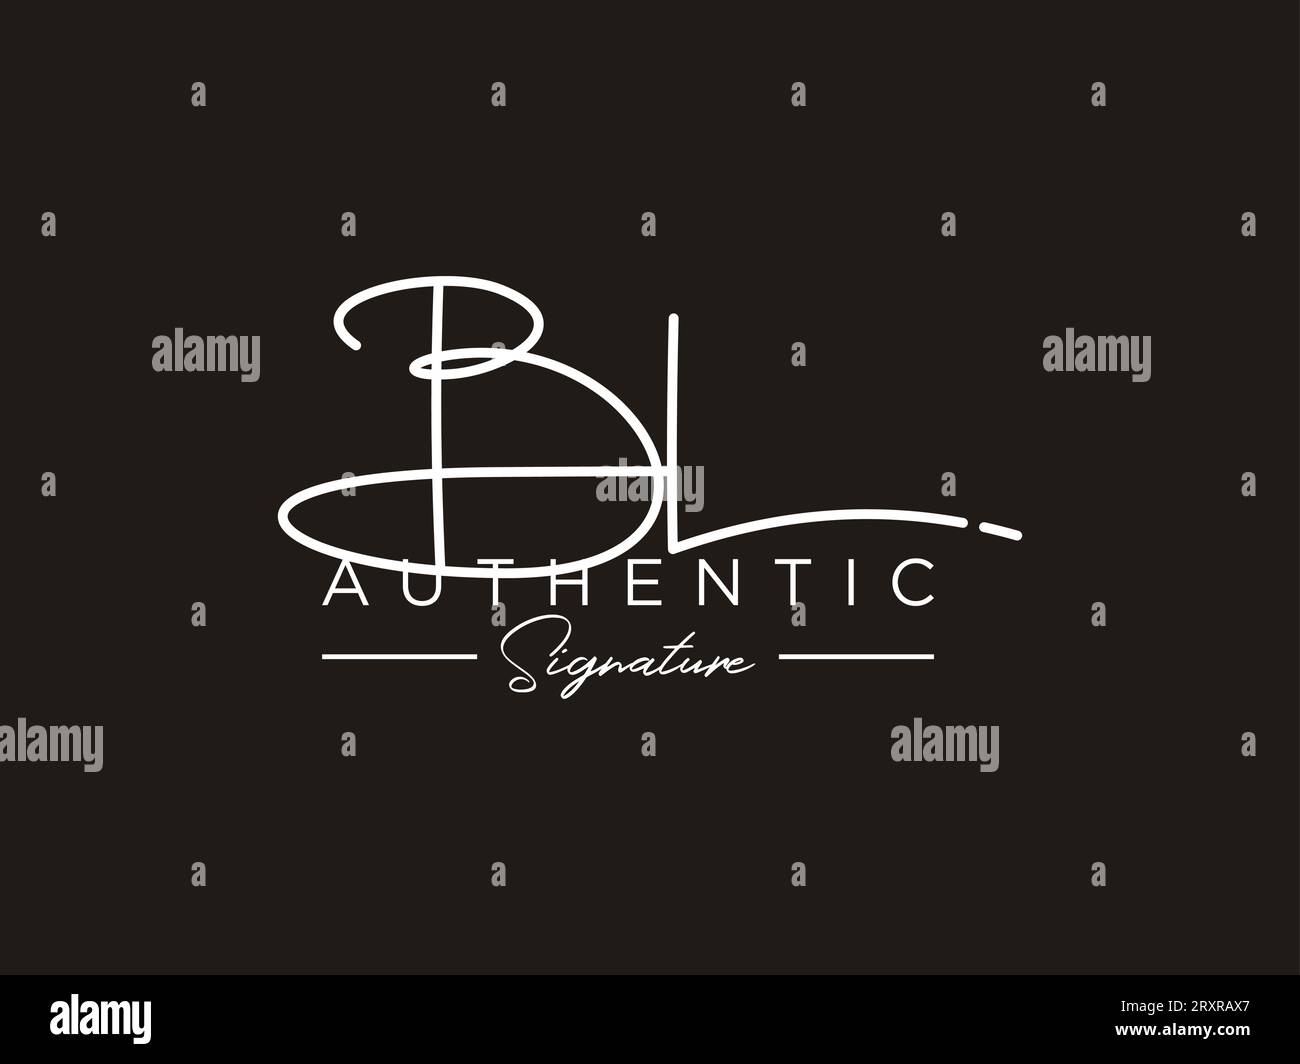 BL Signature Logo Template Vector. Stock Vektor